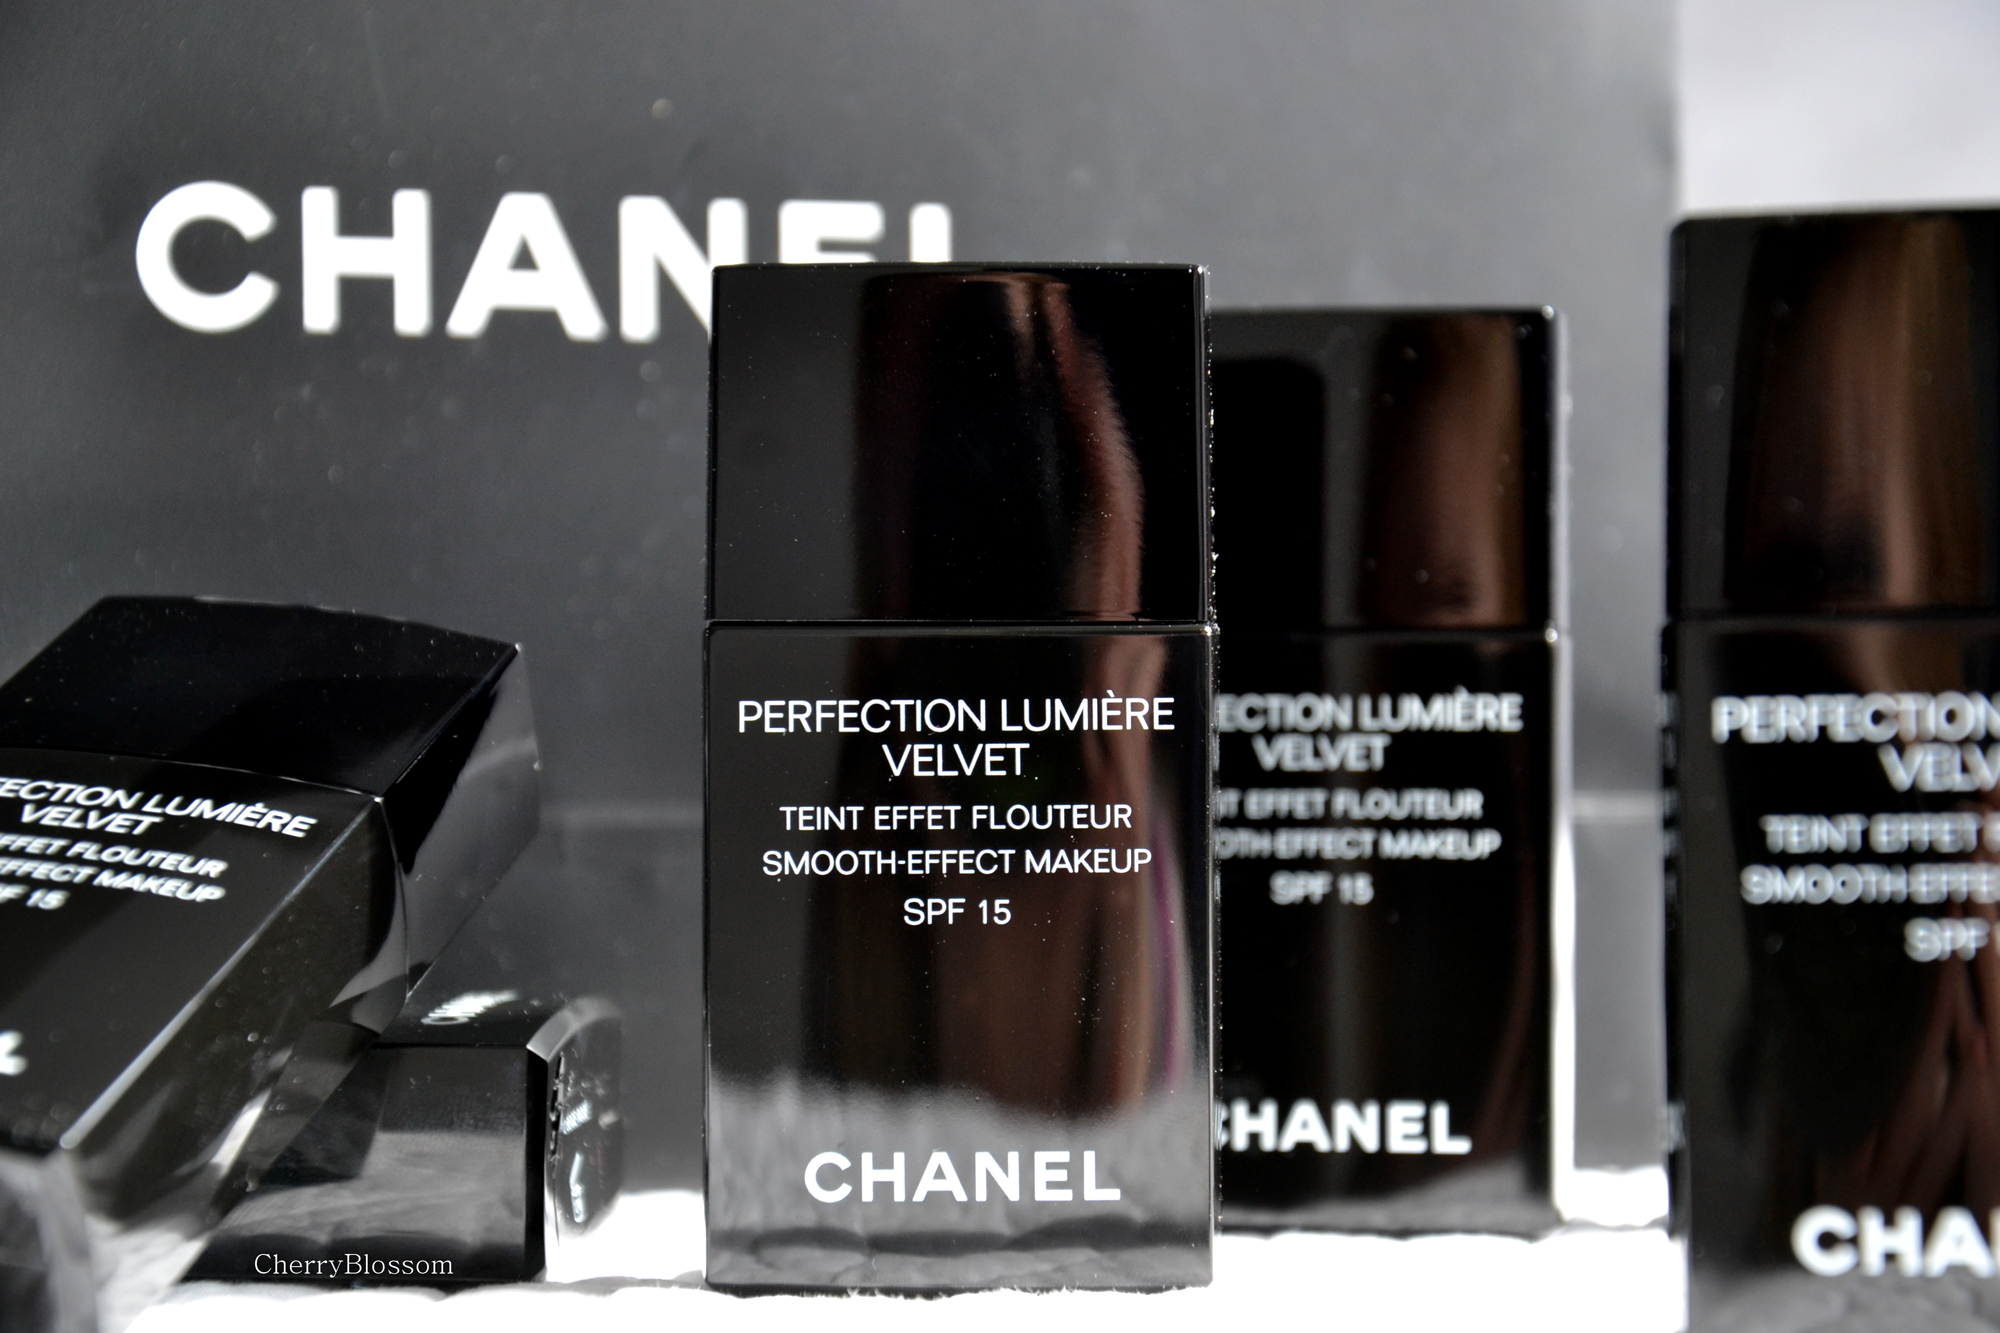 Le teint parfait selon Chanel - CherryBlossom